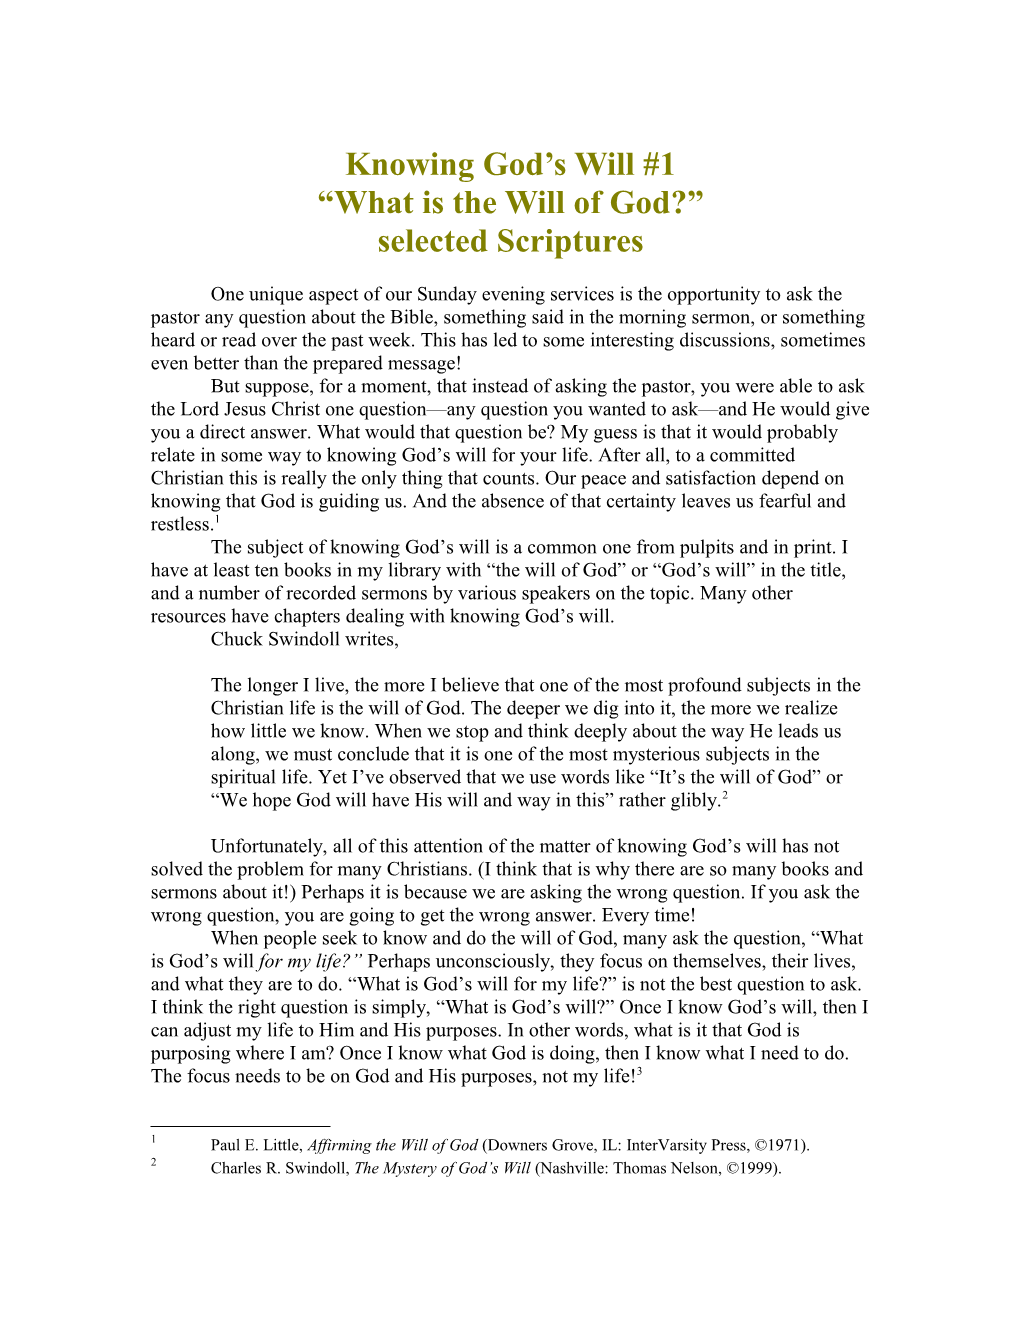 Will of God #1